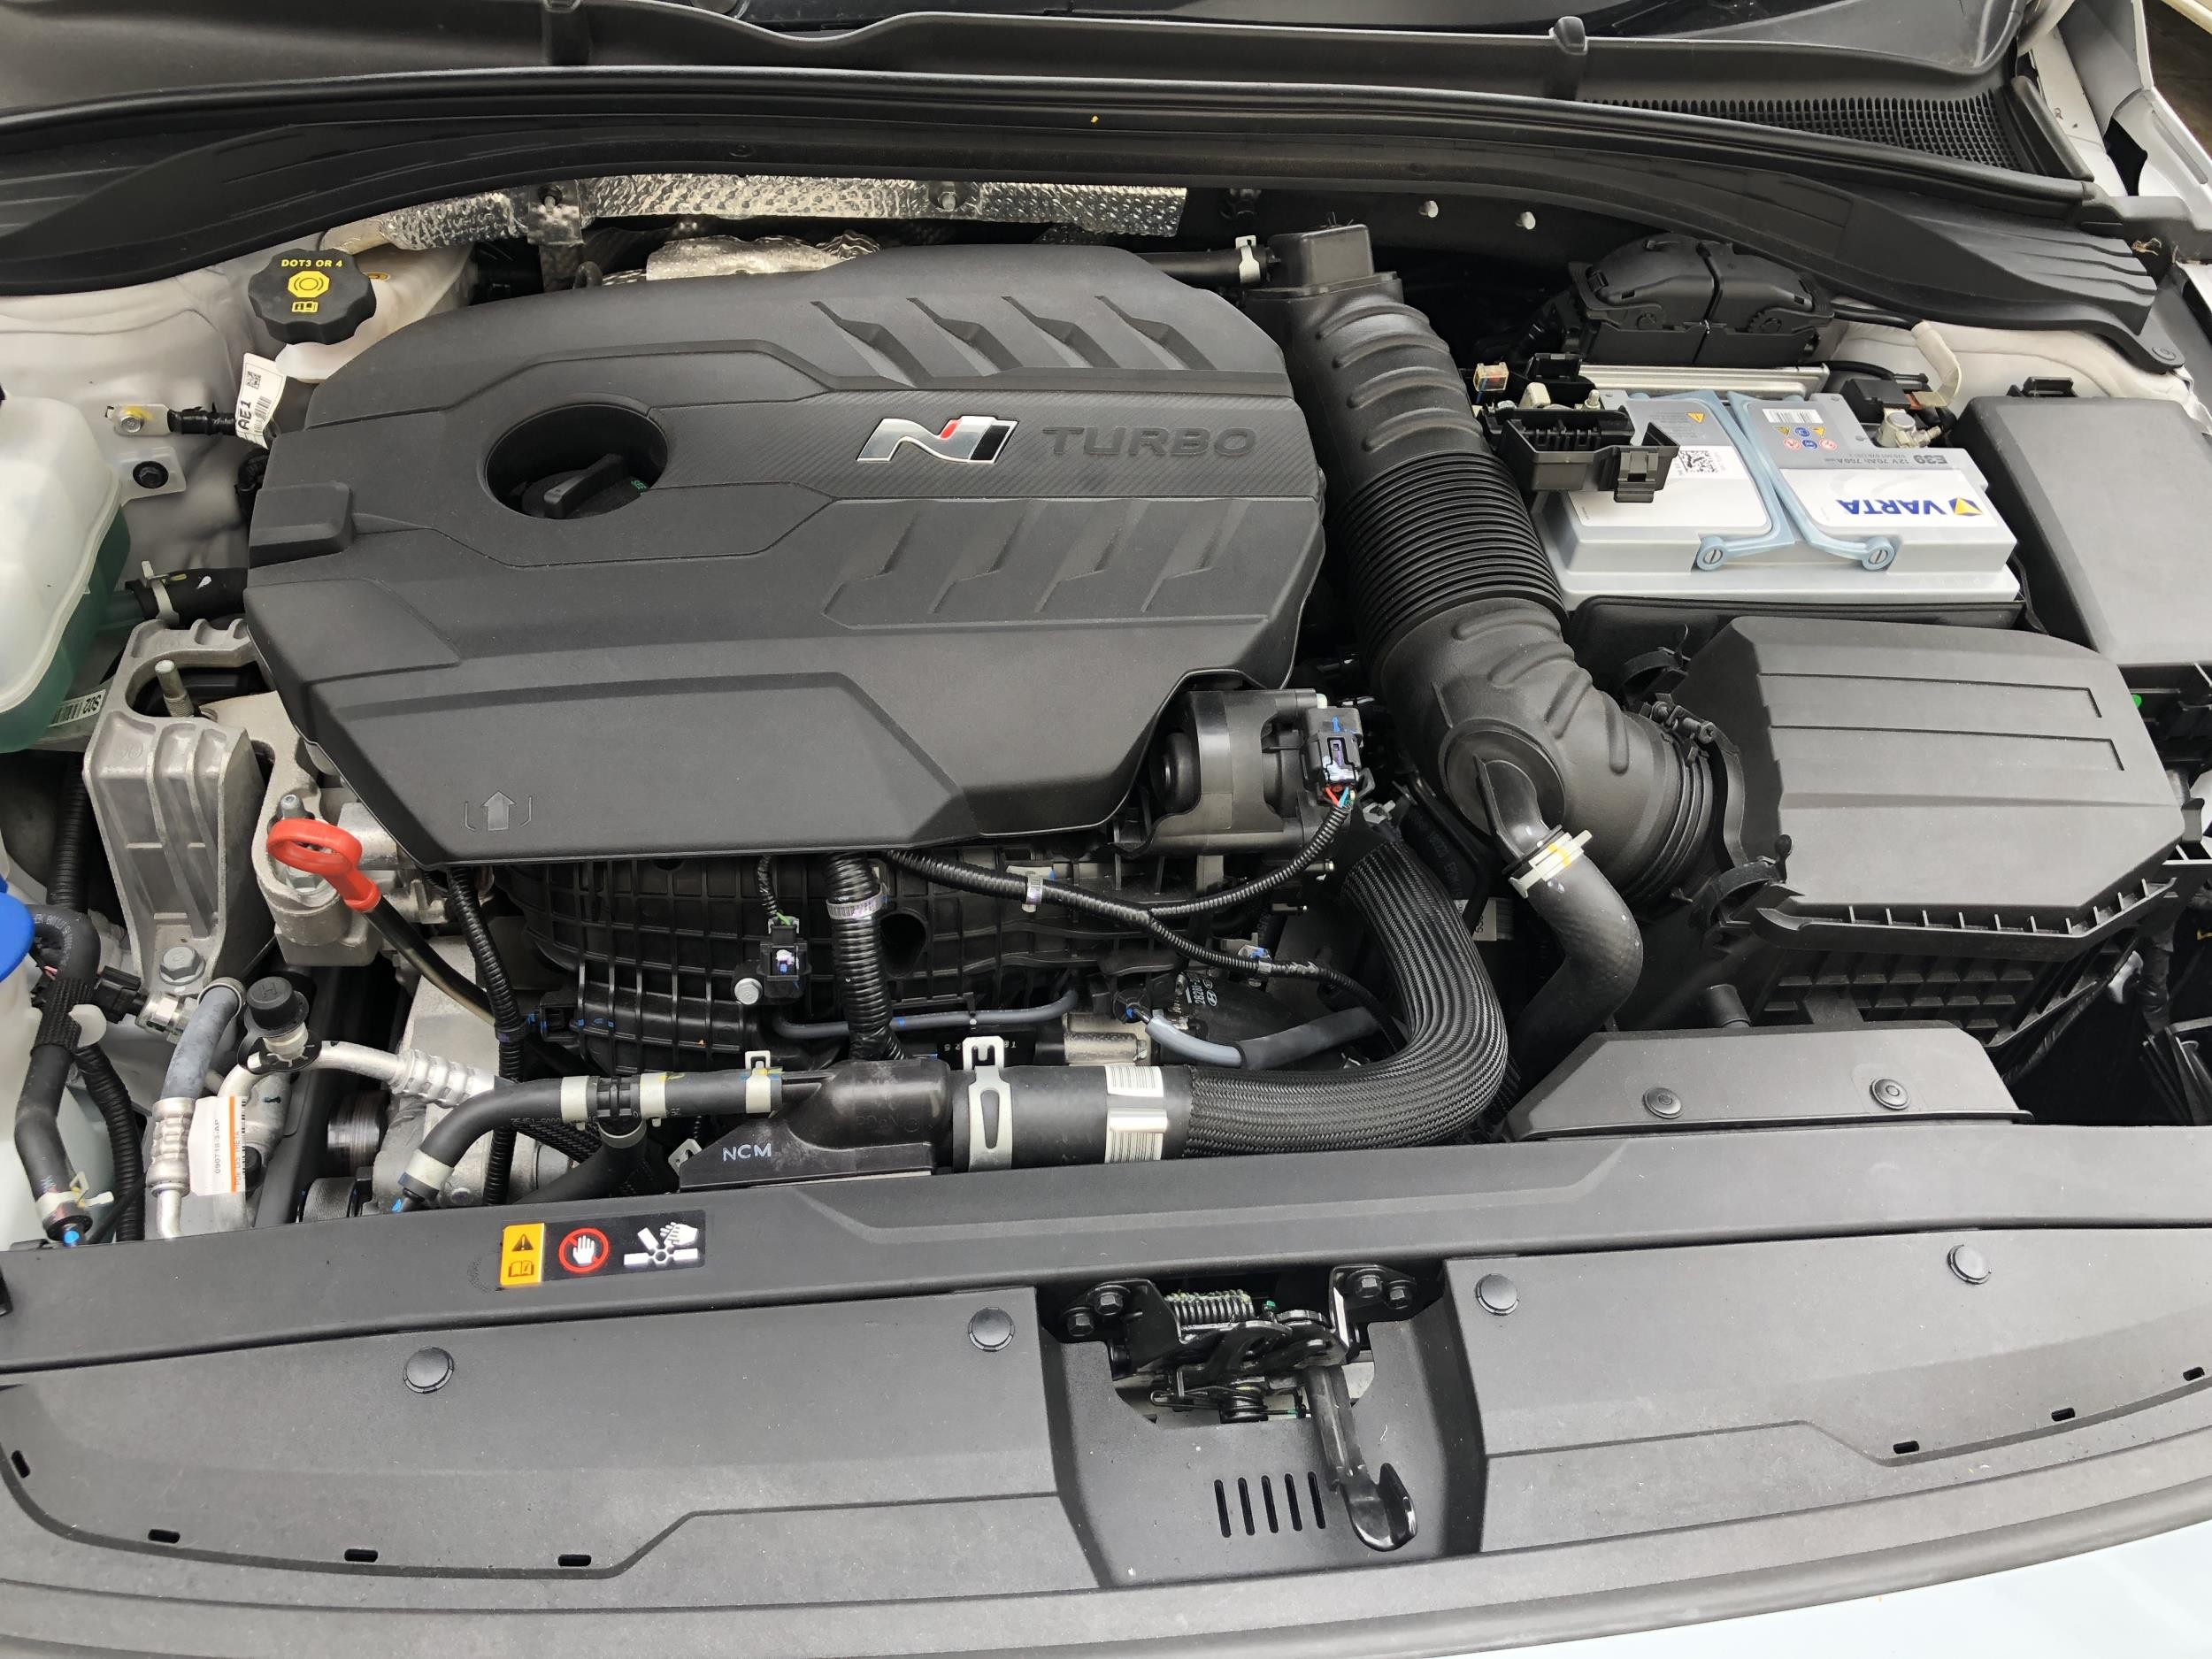 2018 Hyundai I30 N Performance Registration number 35330 Chassis number TMAHC51ALKJ005466 Engine - Image 2 of 21